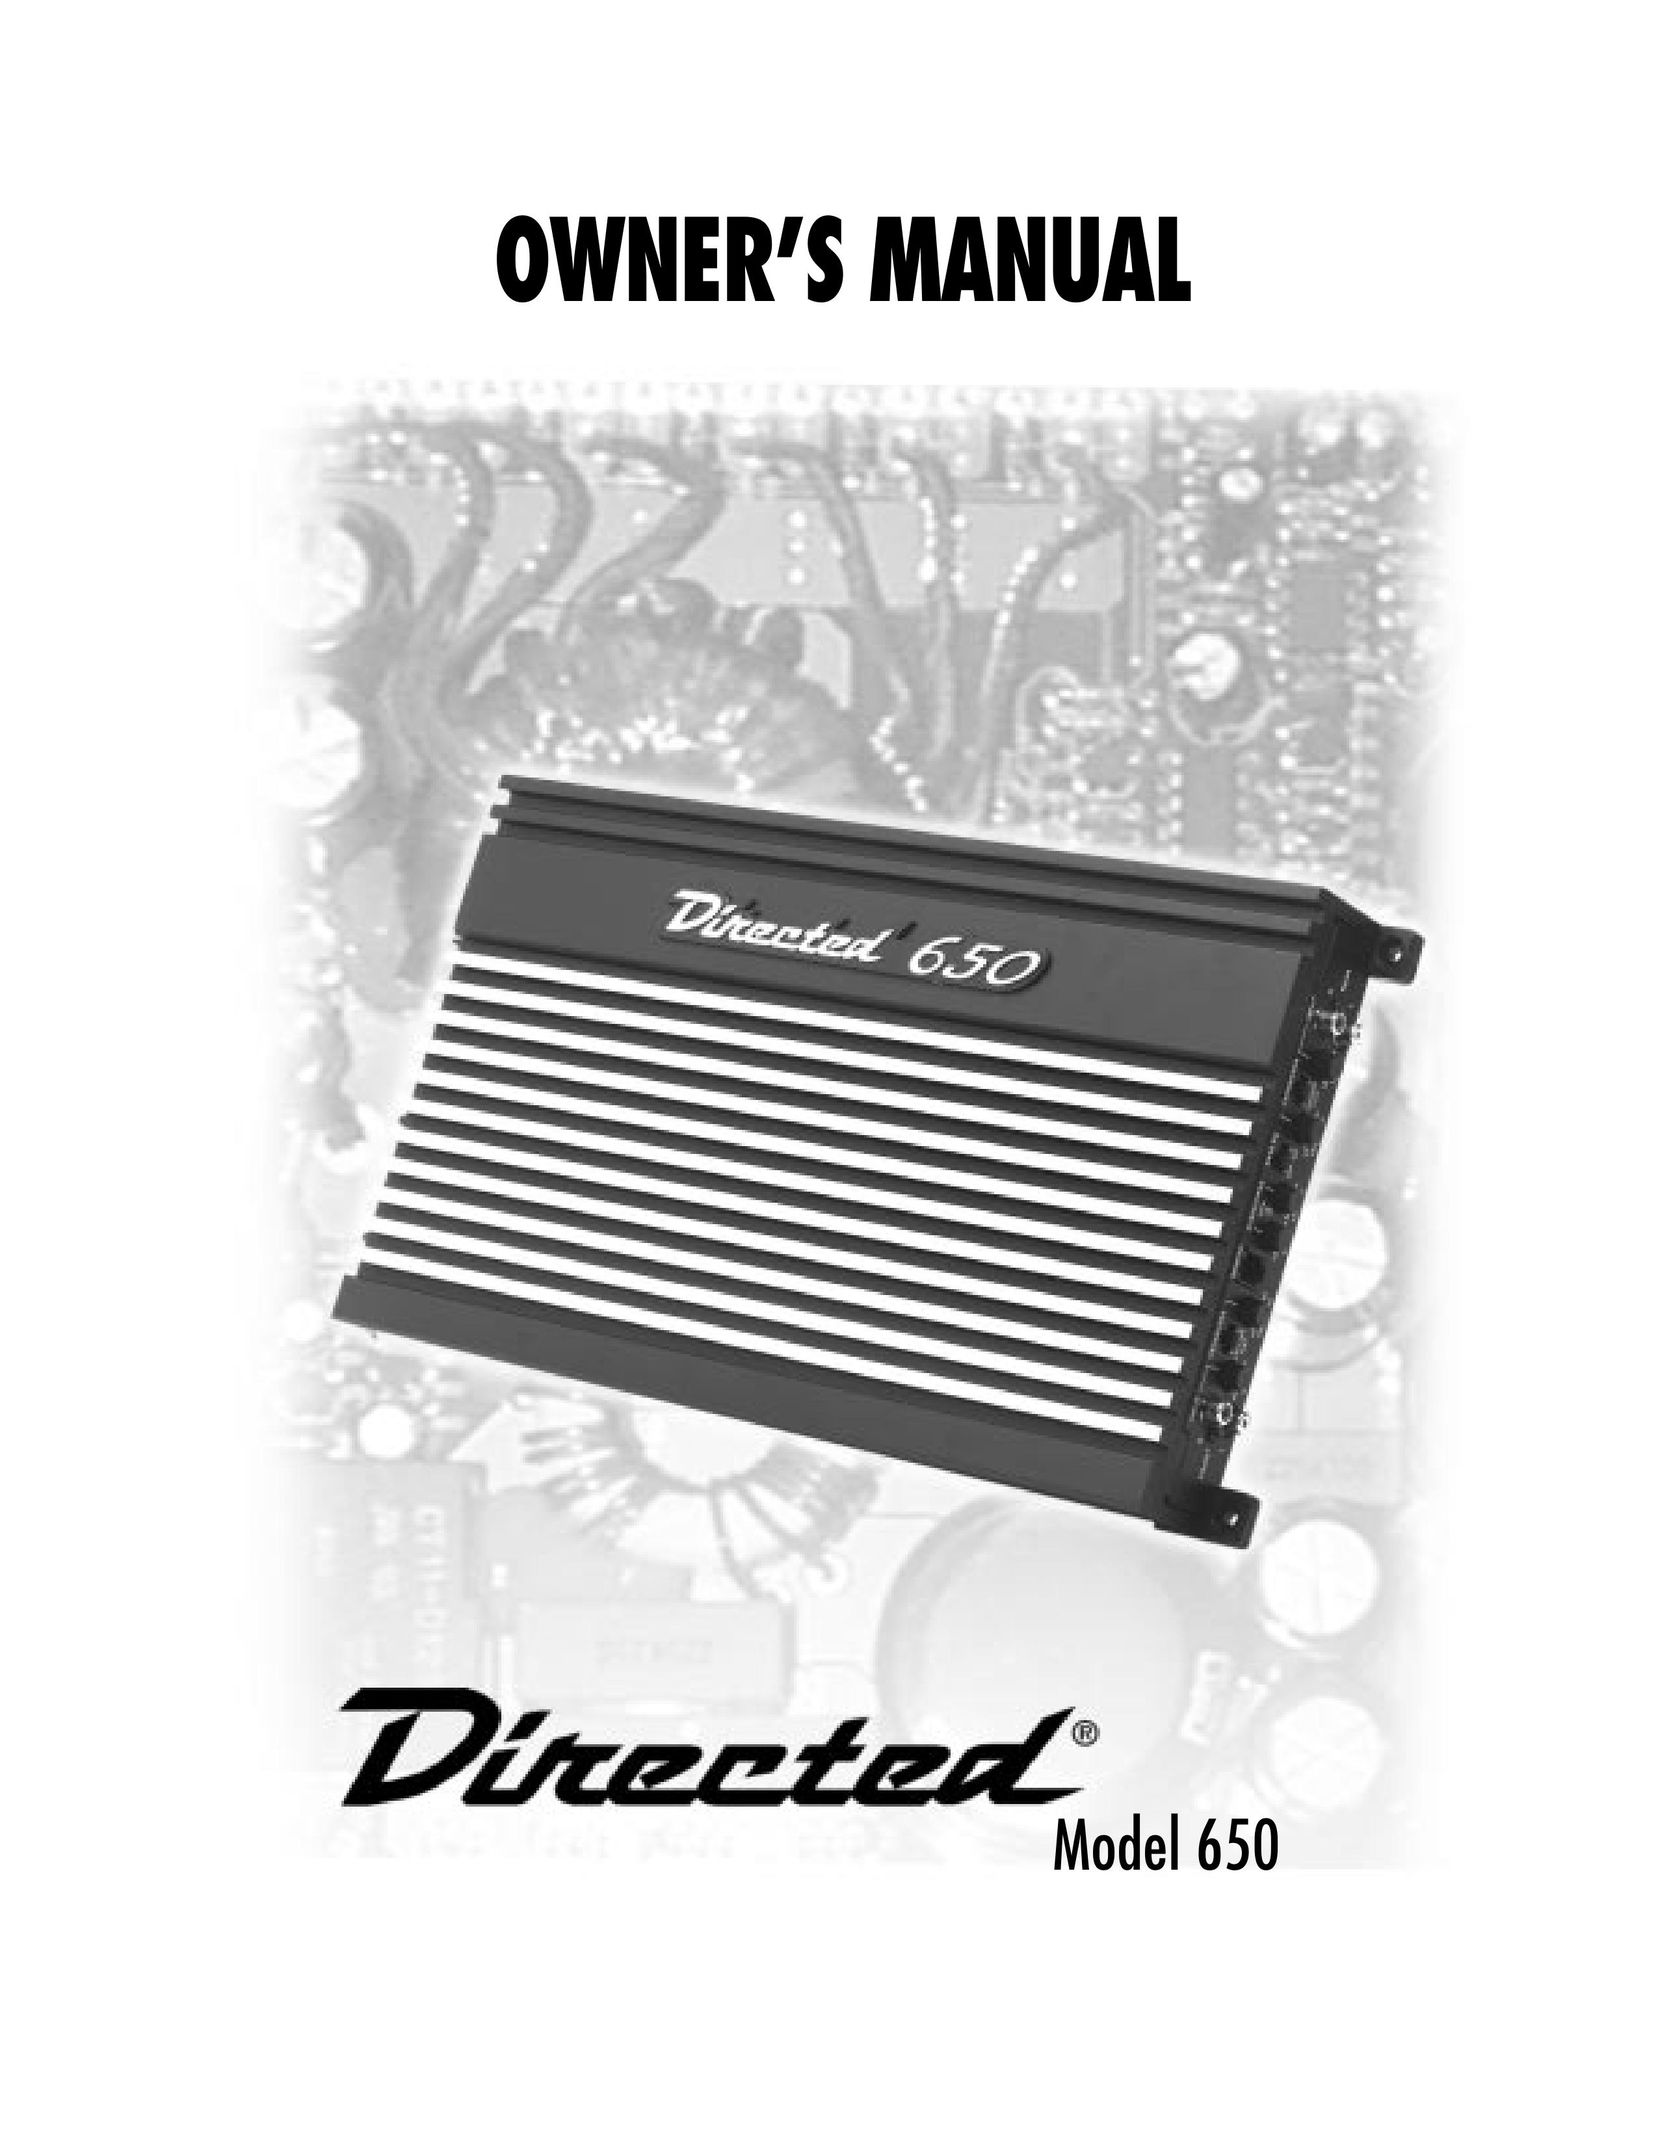 Directed Audio 650 Car Amplifier User Manual